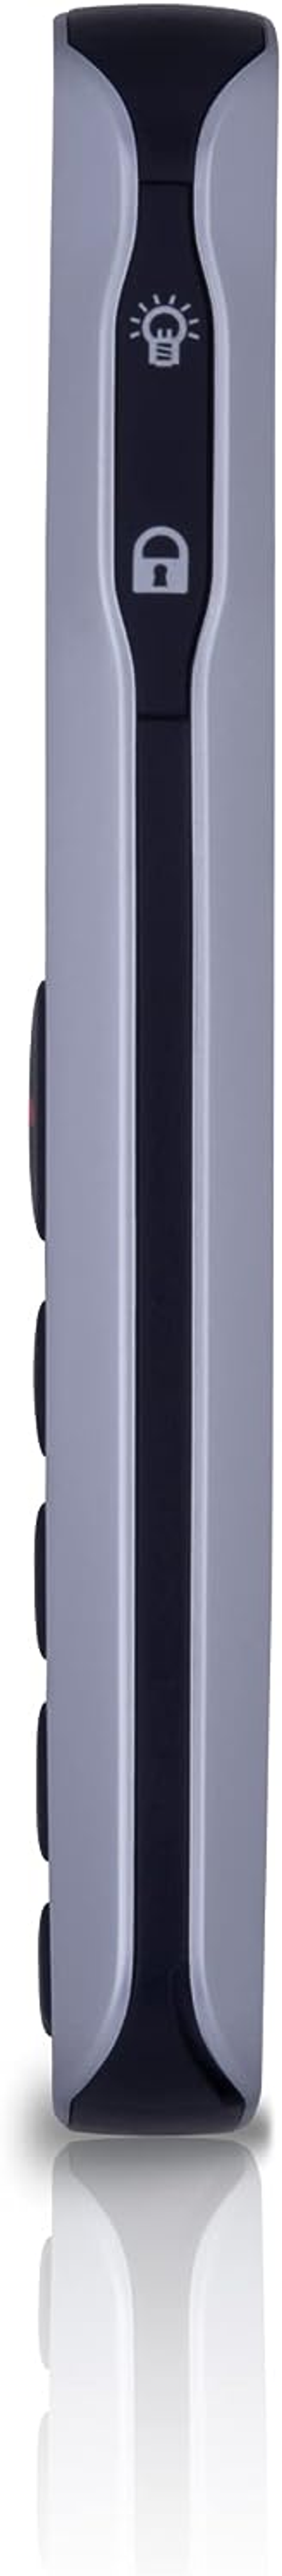 BEAFON SL250 SILBER -SCHWARZ Silber Handy